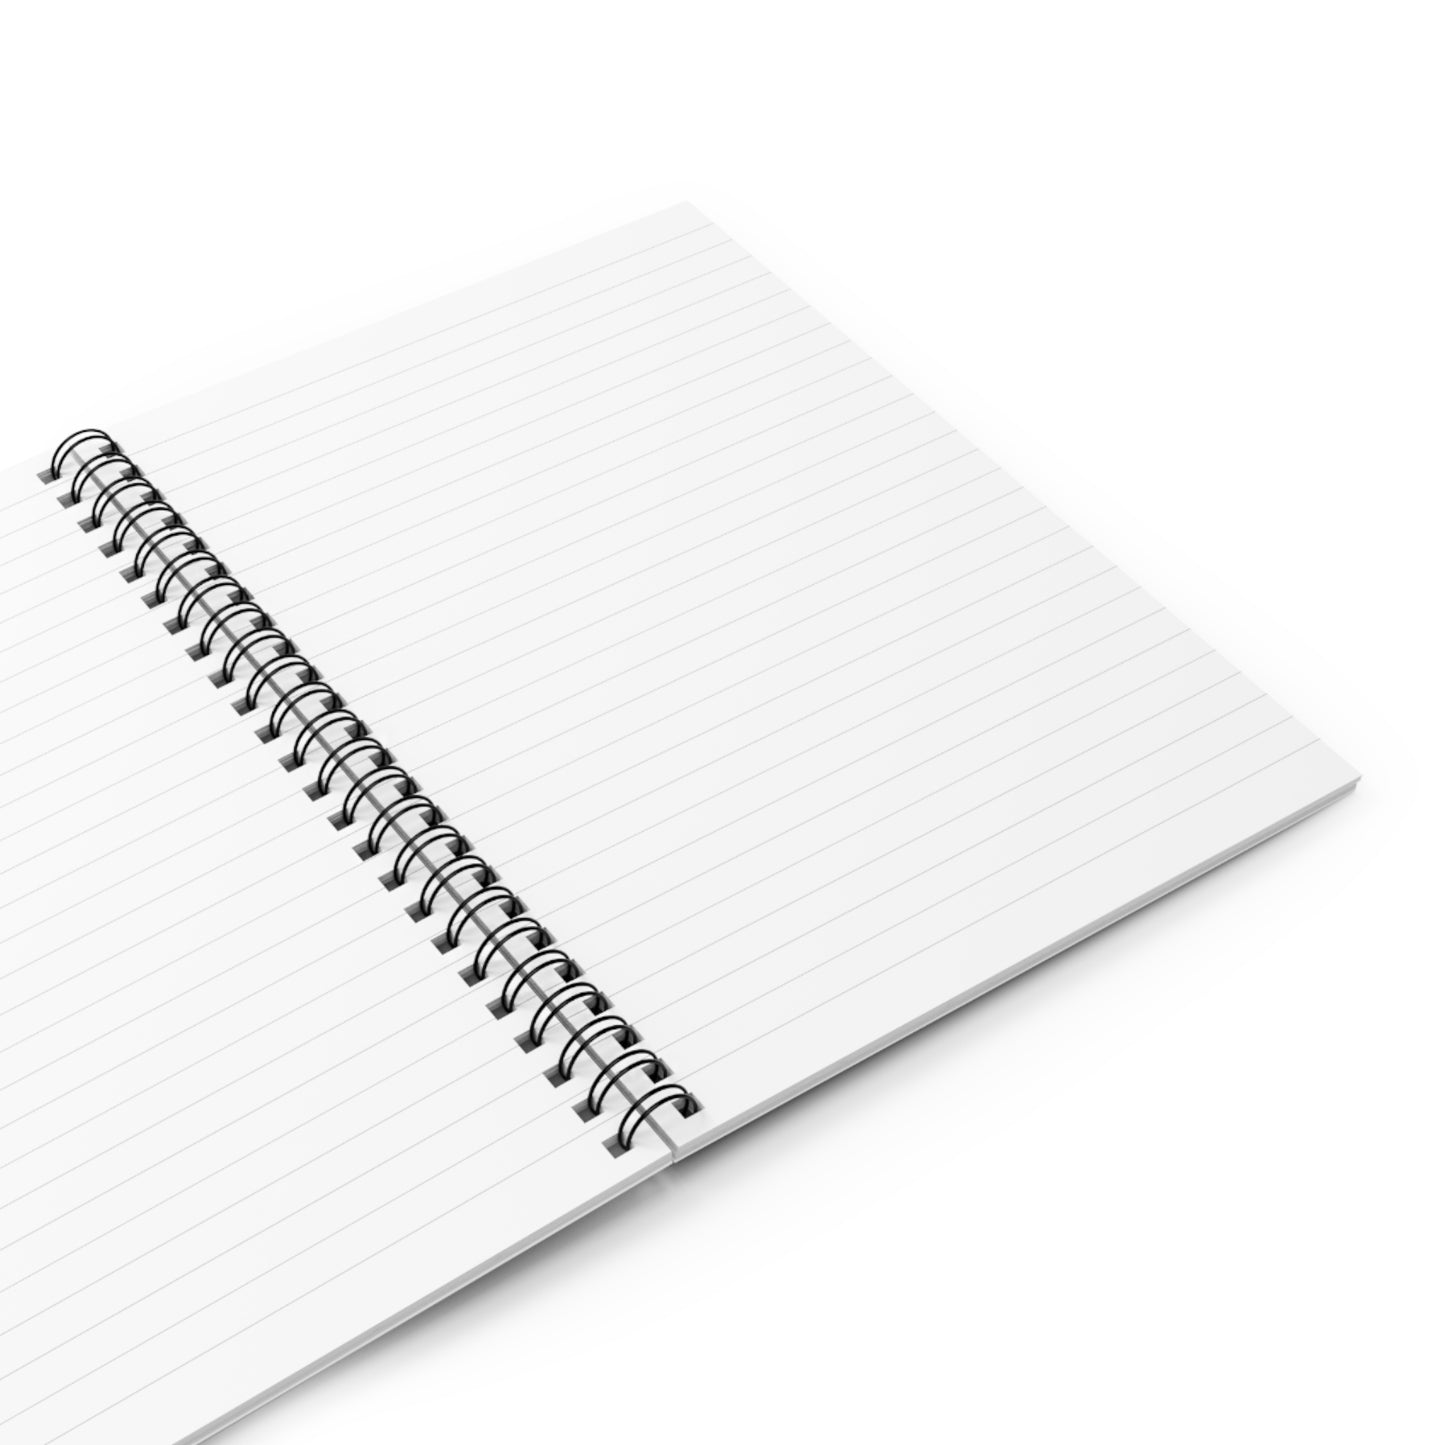 Otter Spiral Notebook - Ruled Line